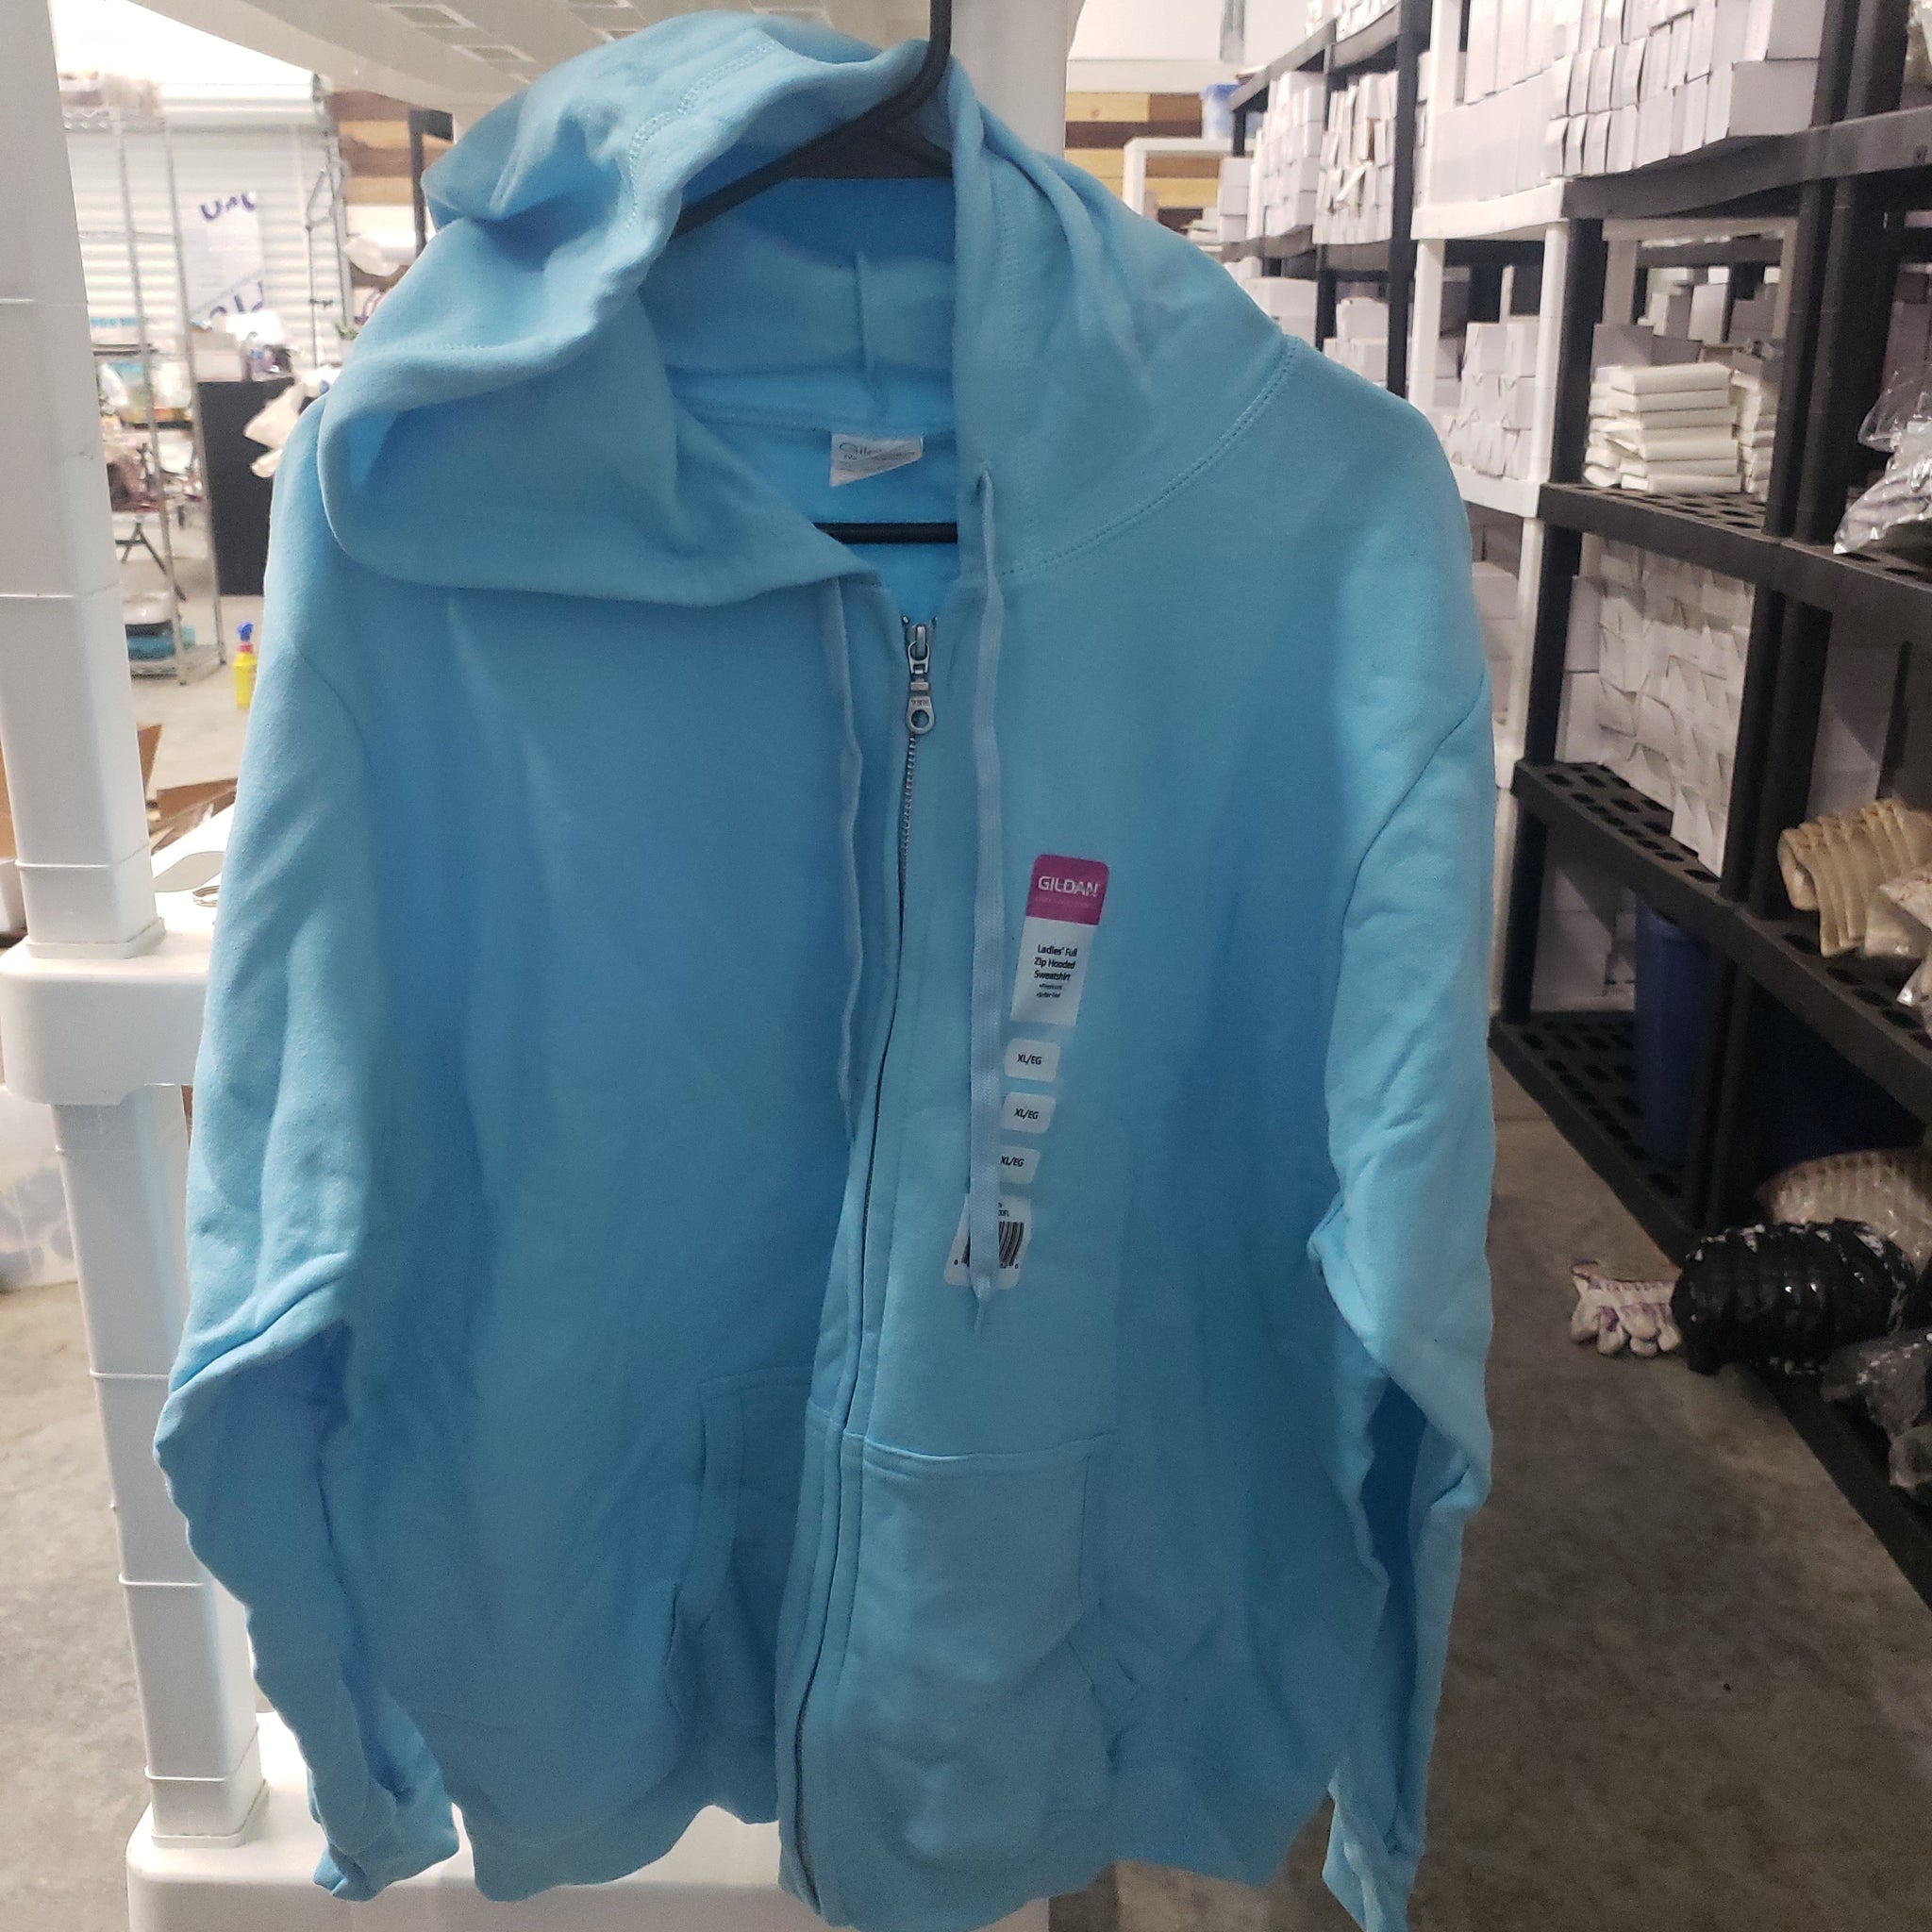 Gildan zip up hoodie size xl large